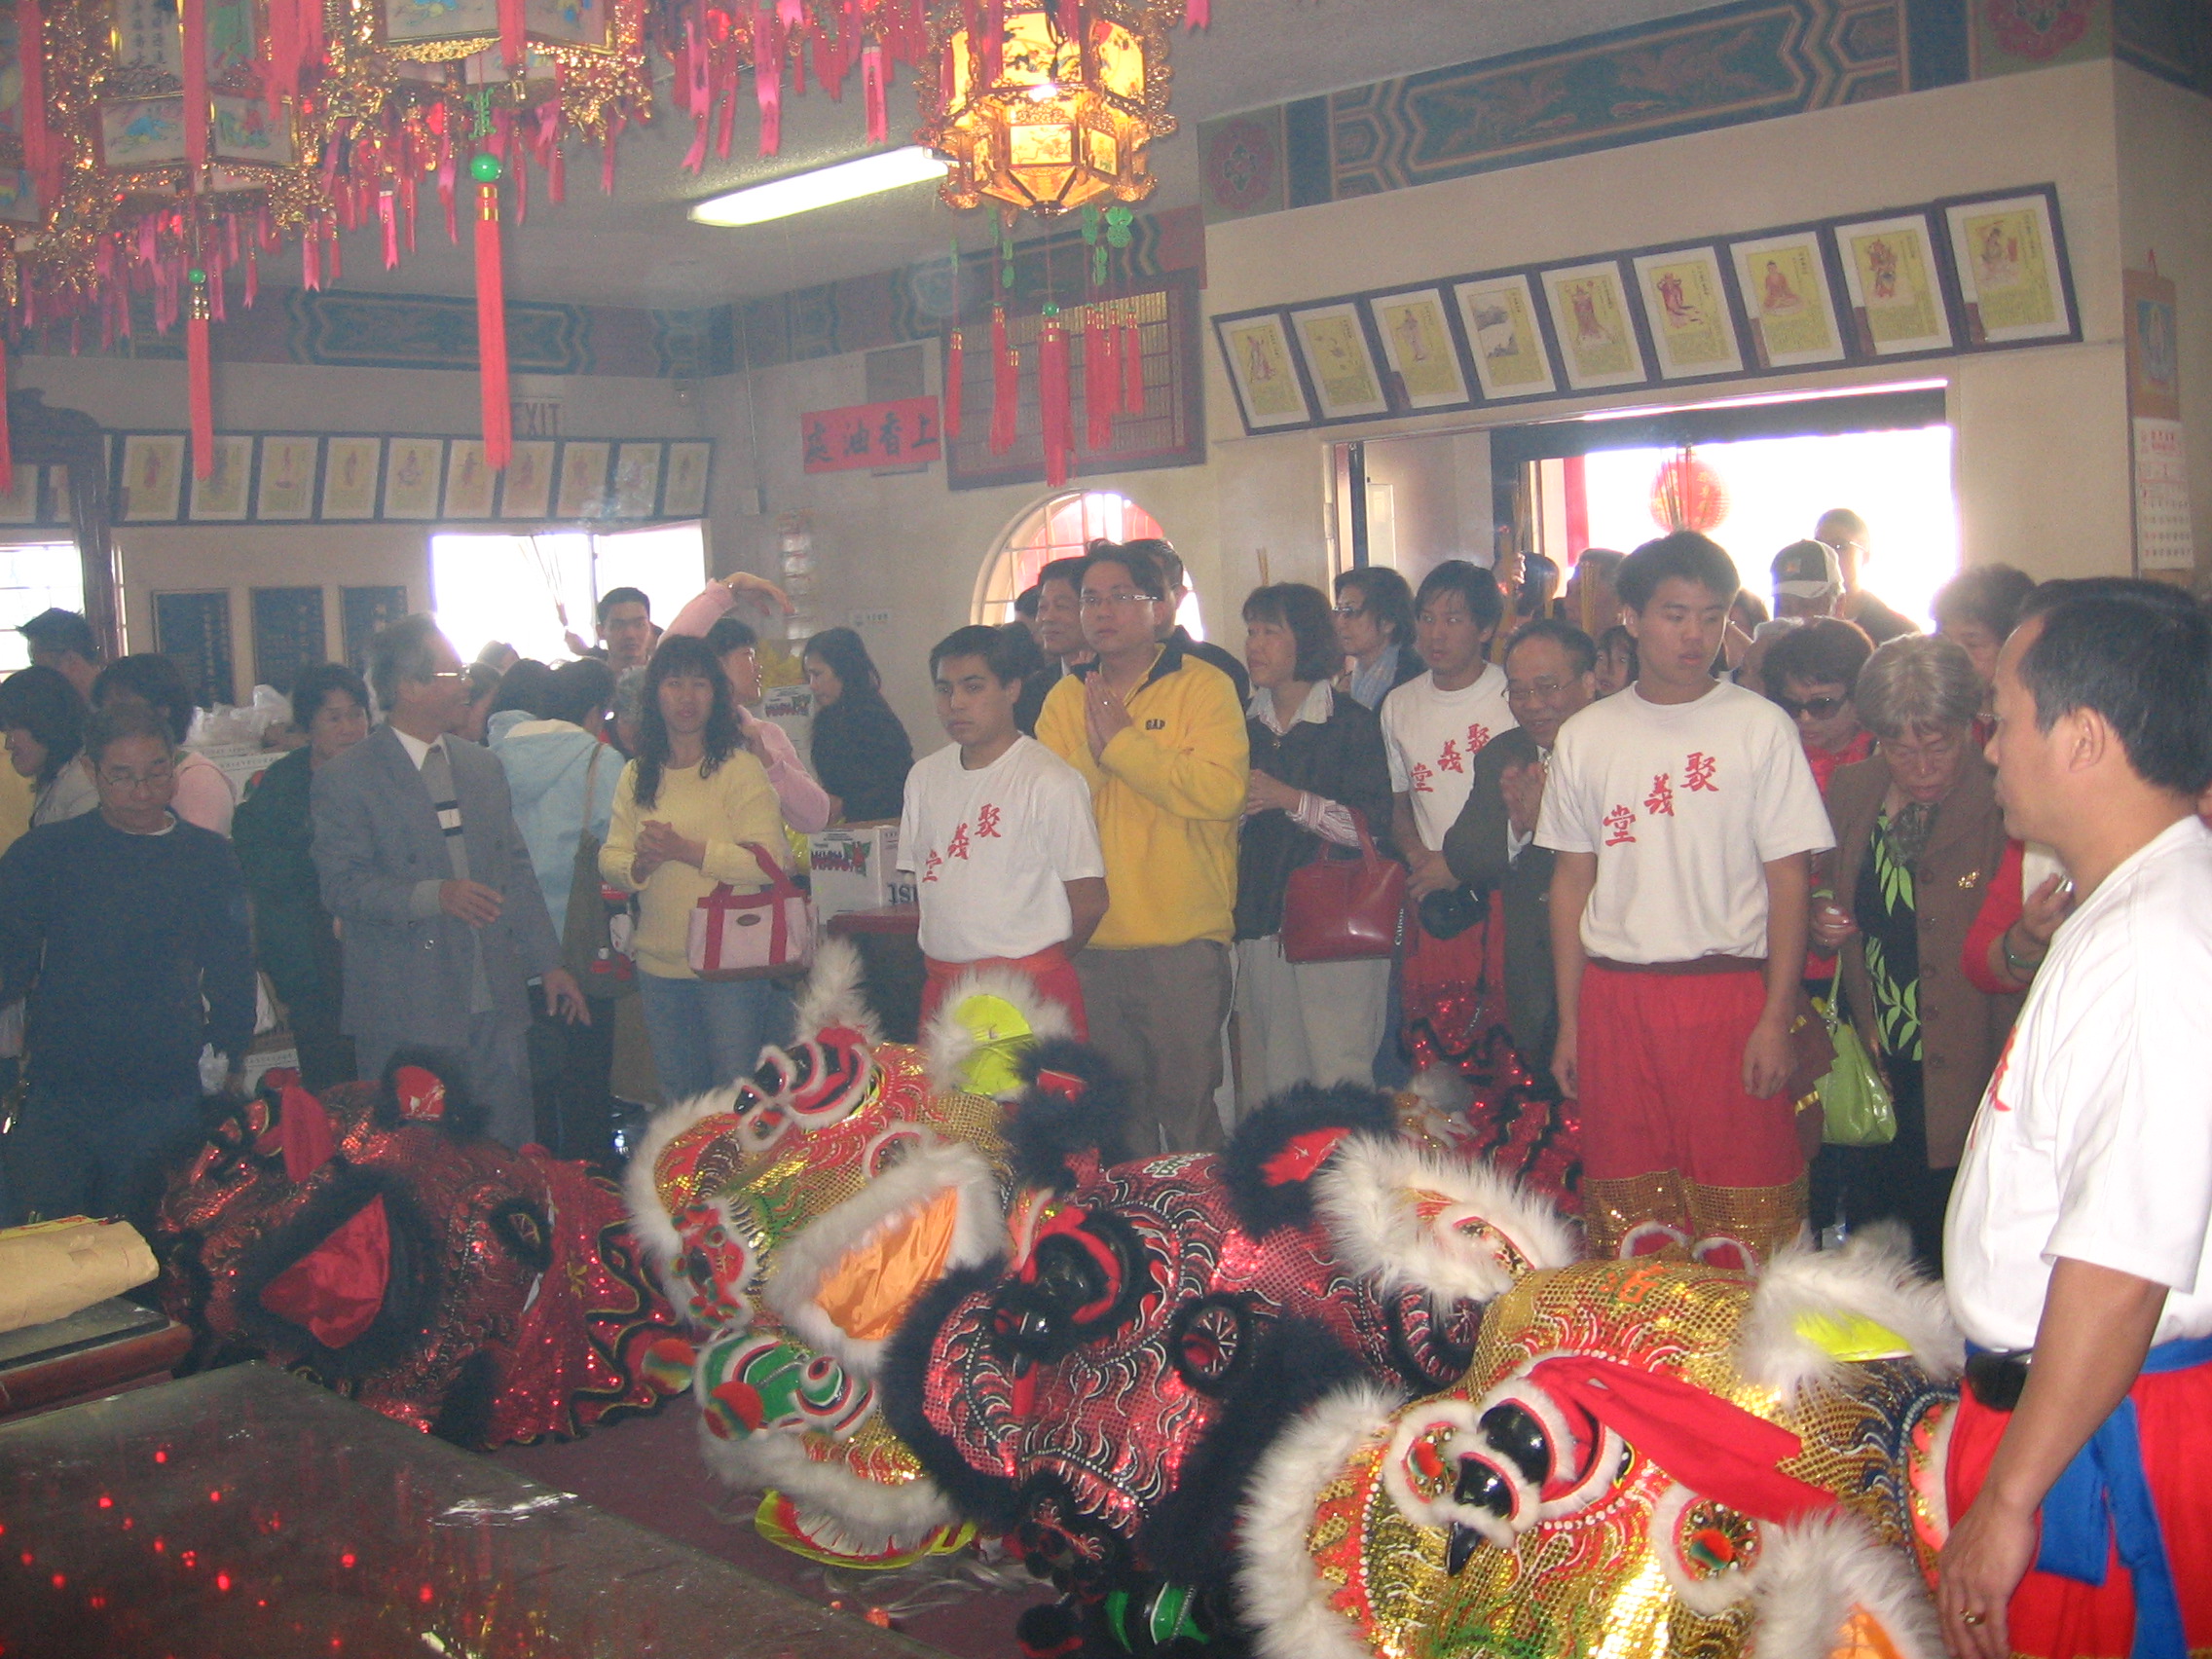 Festivities | Sarawakfestival's Blog2272 x 1704